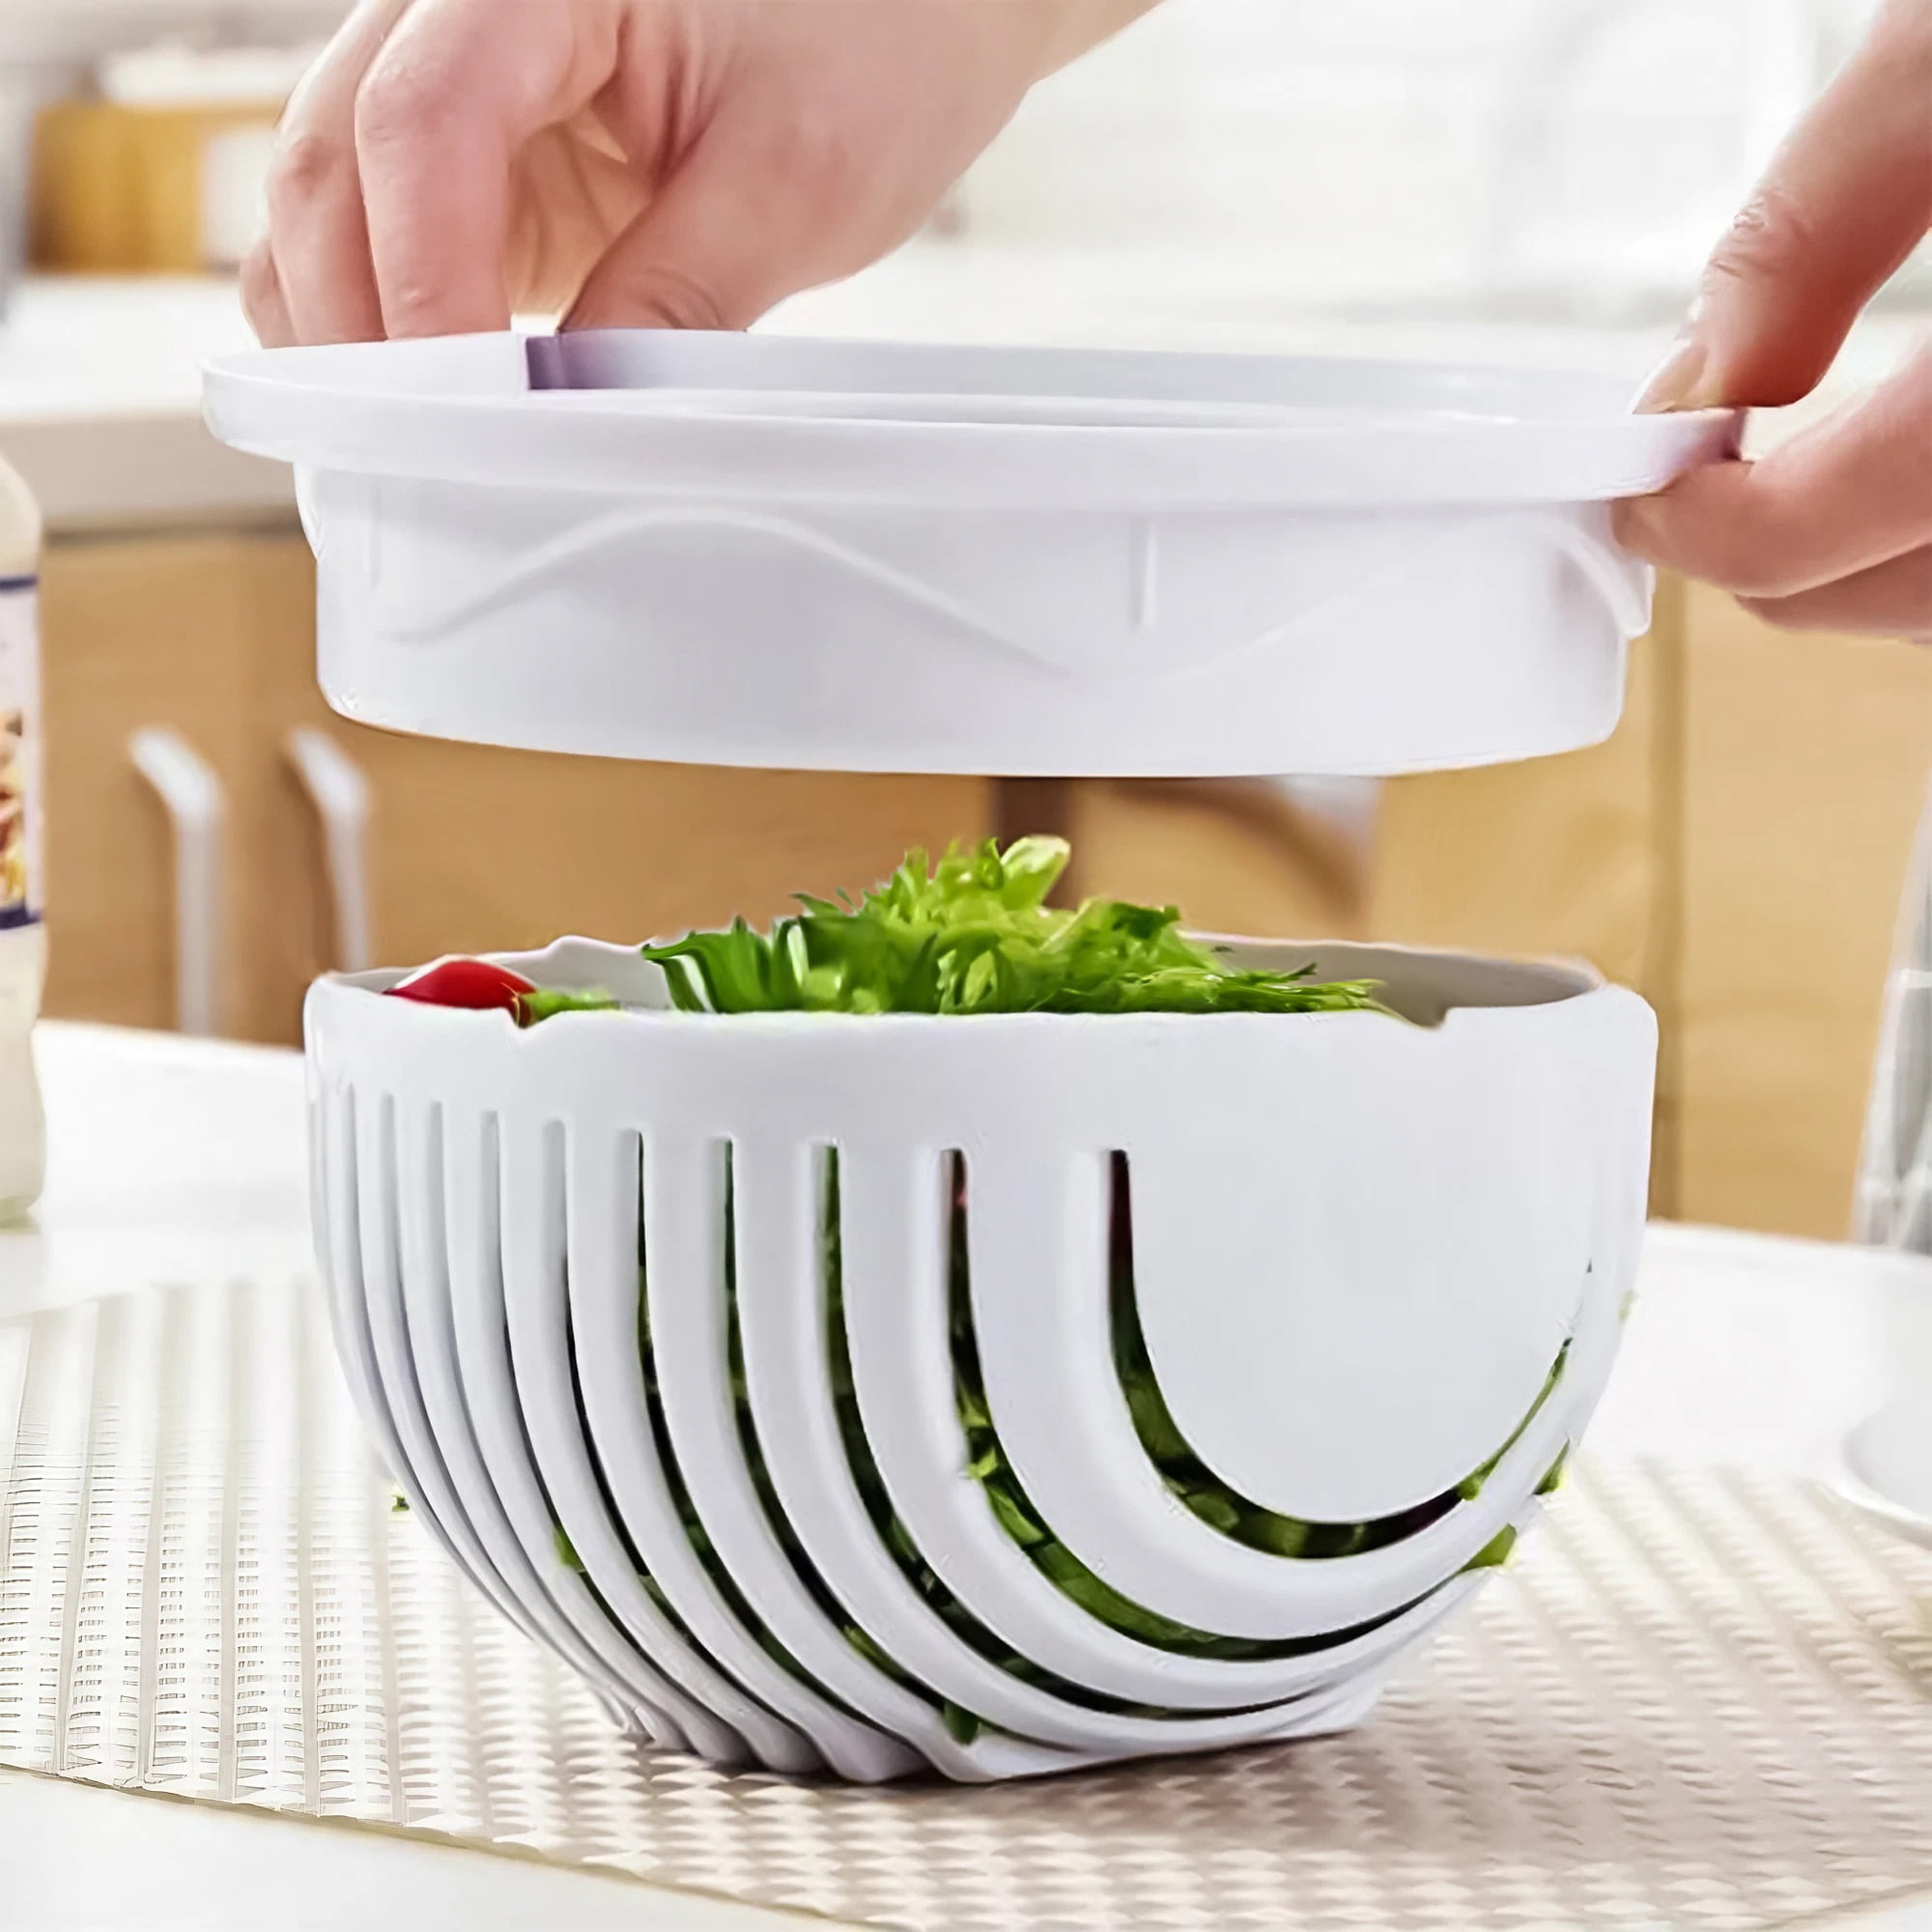 wulikanhua Salad Cutter Bowl, Salad Maker, Fast Fruit  Vegetable Salad Chopper Bowl, Thick, Durable Material, Vegetable Drain Bowl,  Dishwasher Safe, Fresh Salad Maker - (White): Salad Bowls